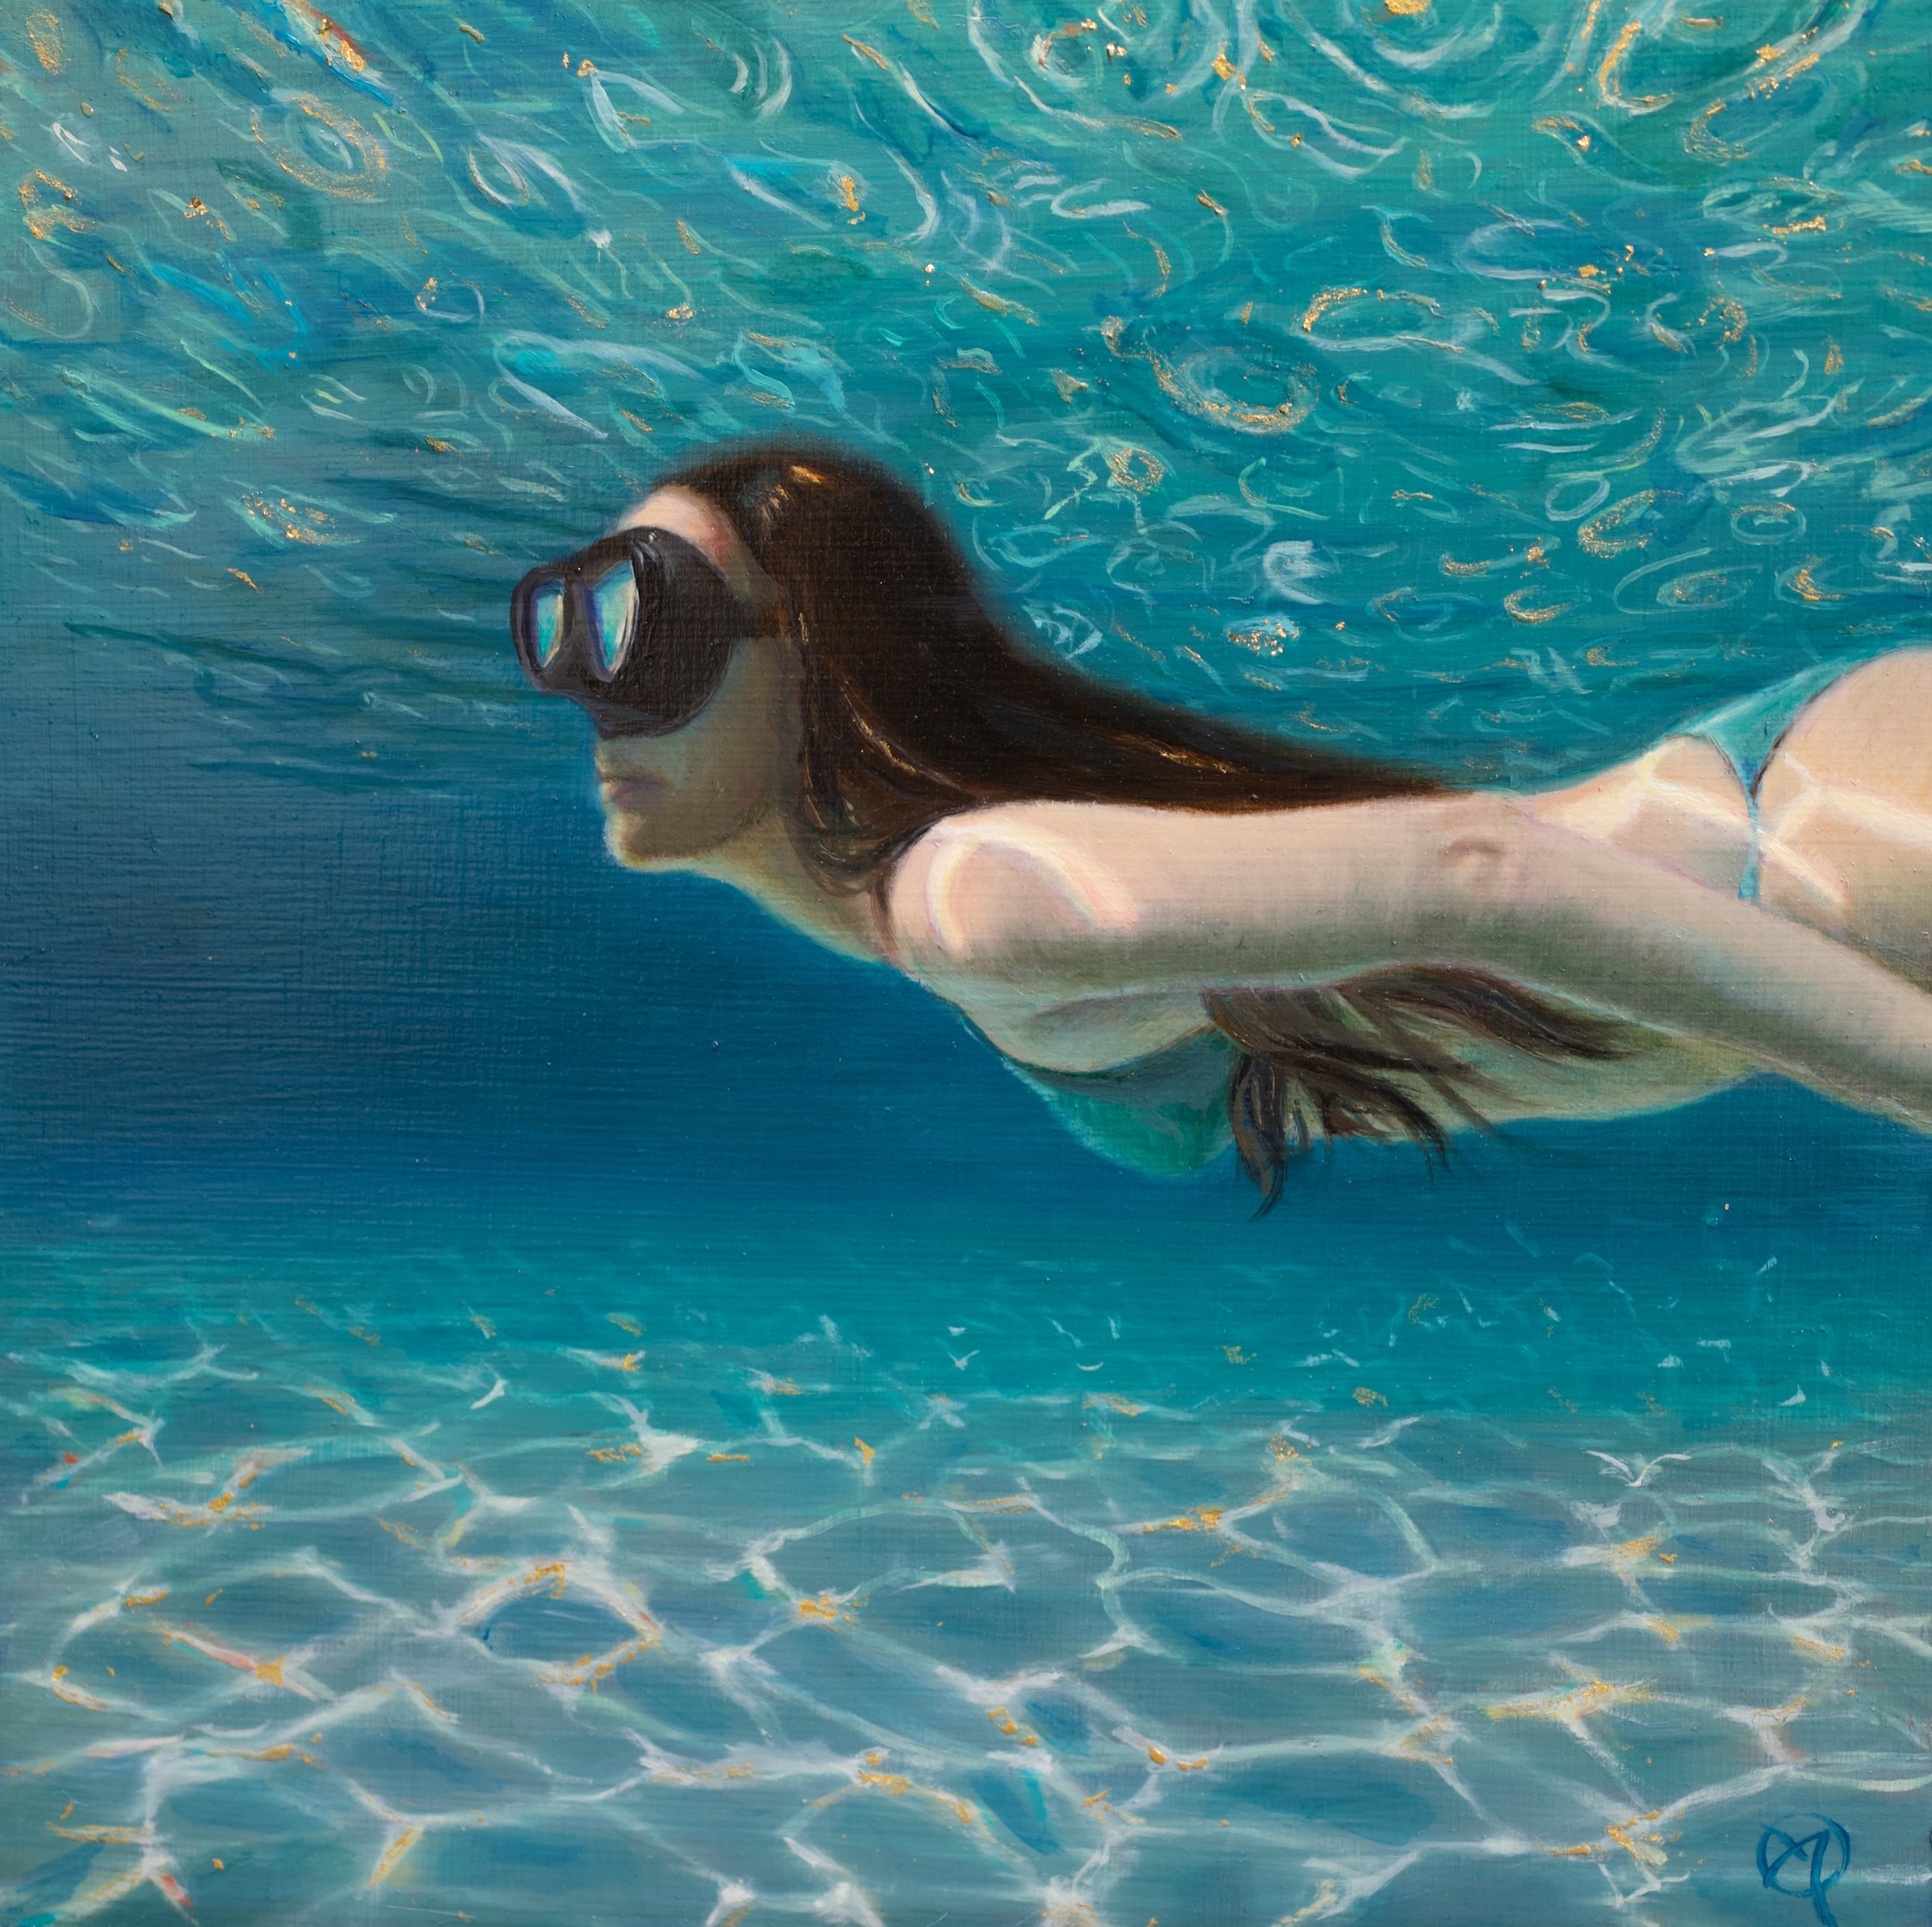 Ocean-themed figurative oil paintings gallery